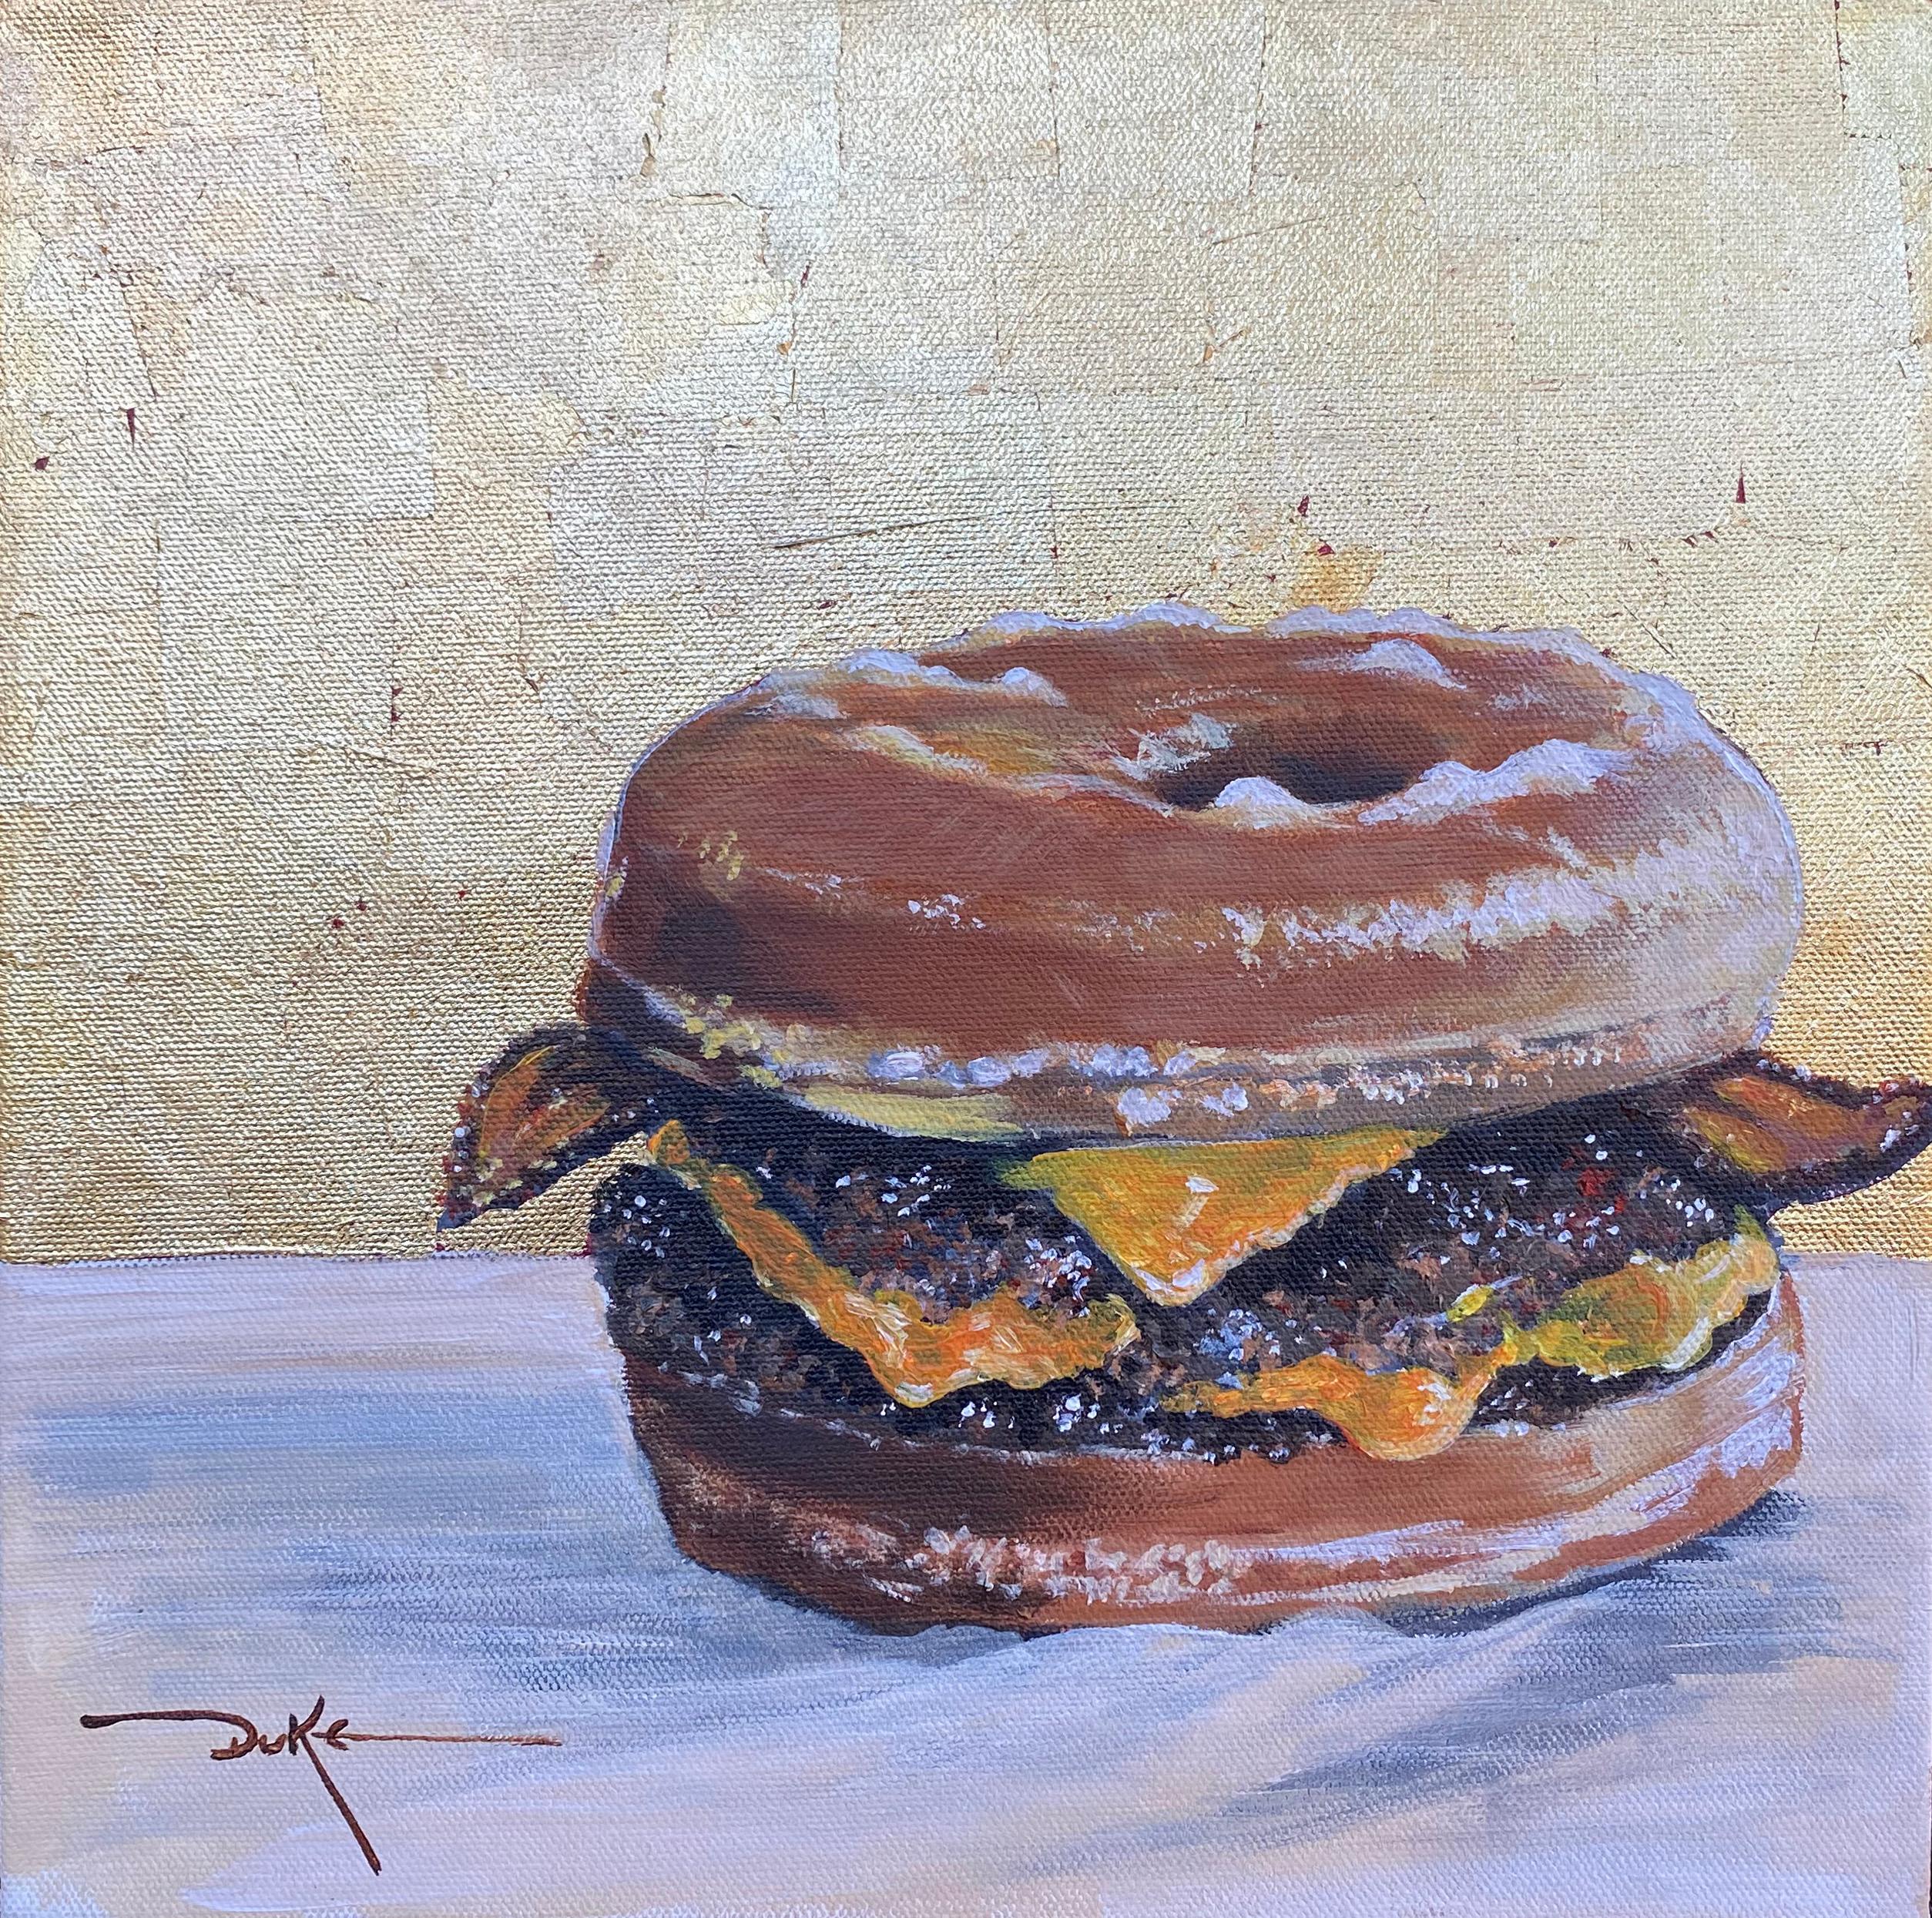 Duke Windsor  Still-Life Painting - Impressionist Still Life, "Crispy Cheeseburger Deluxe"